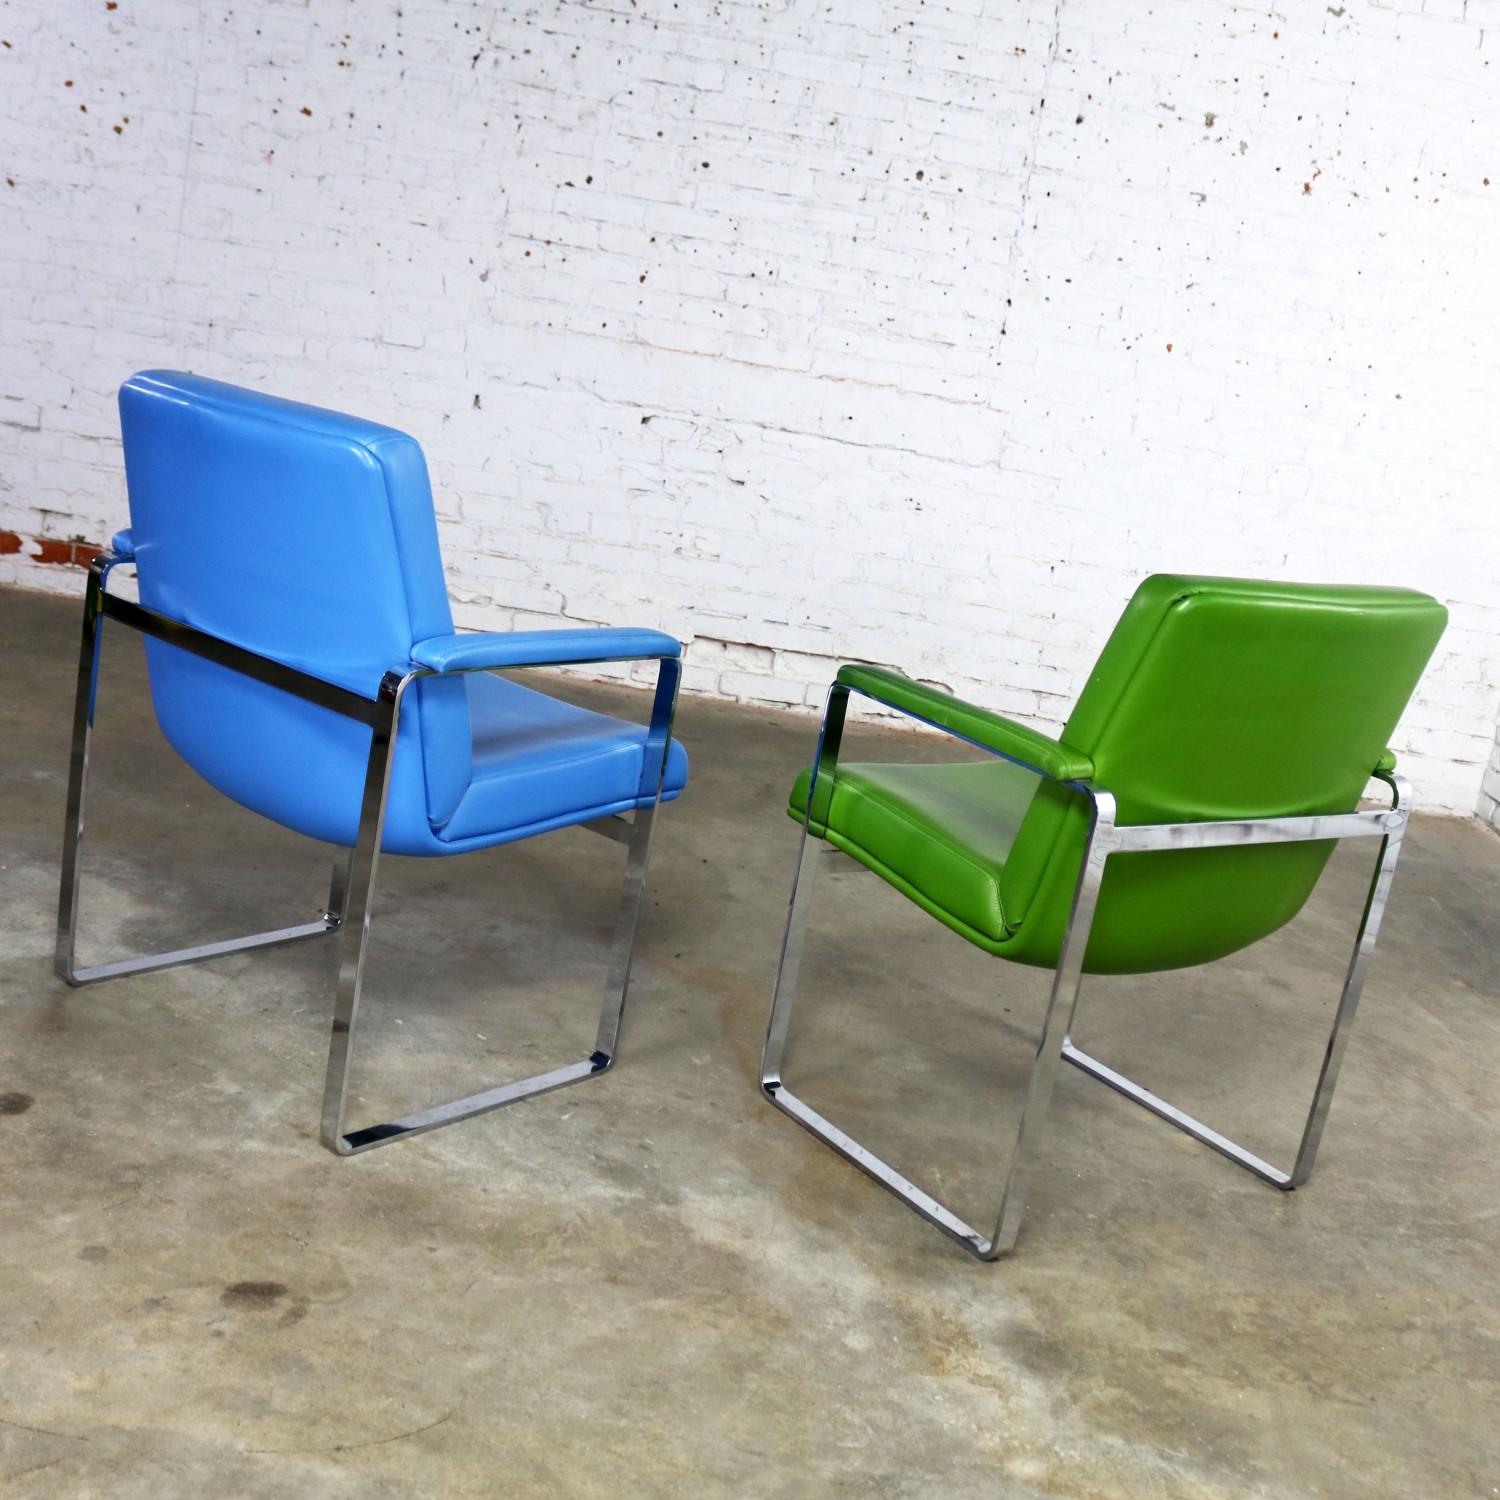 20th Century Mid-Century Modern Chromcraft Flat Bar Chrome Chairs One Blue One Green Vinyl